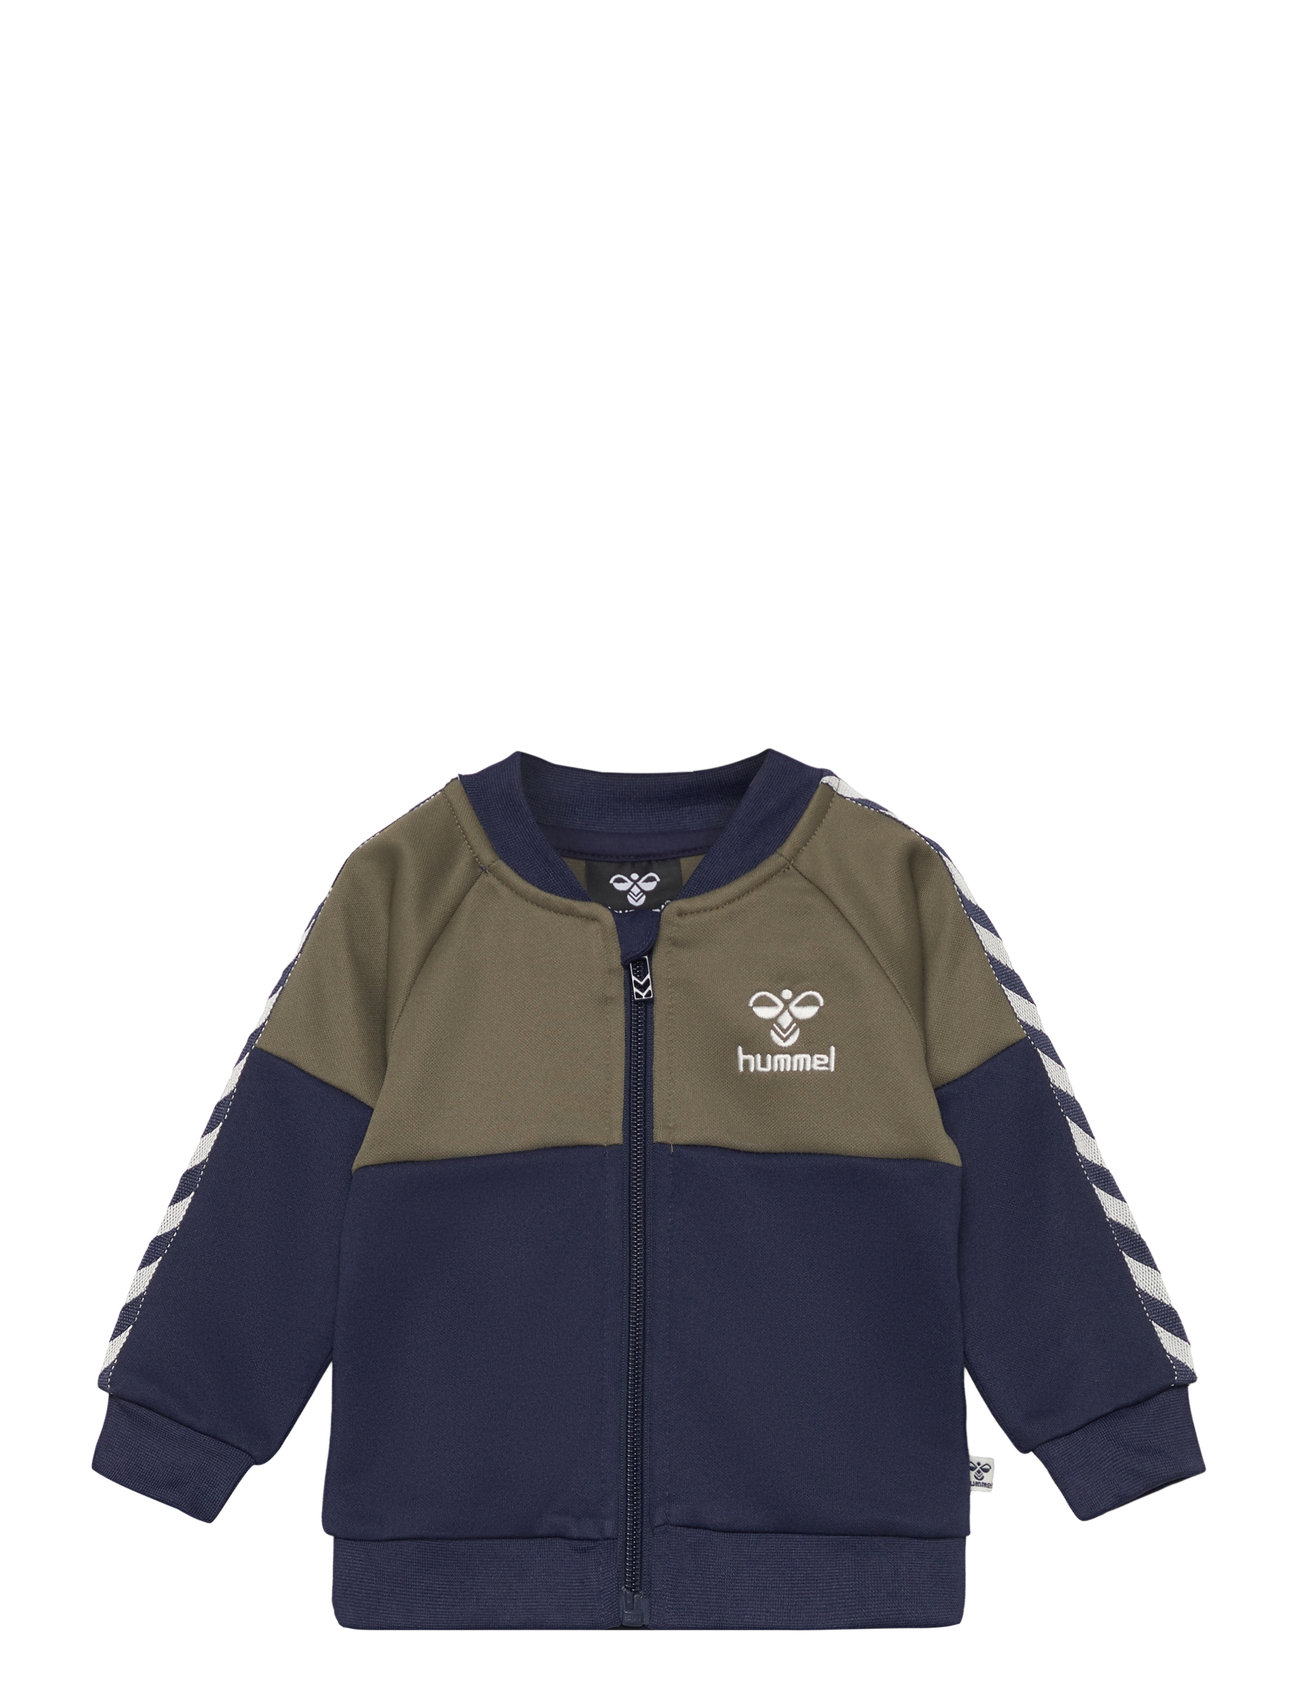 Hmlolek Zip Jacket Sport Sweat-shirts & Hoodies Sweat-shirts Navy Hummel